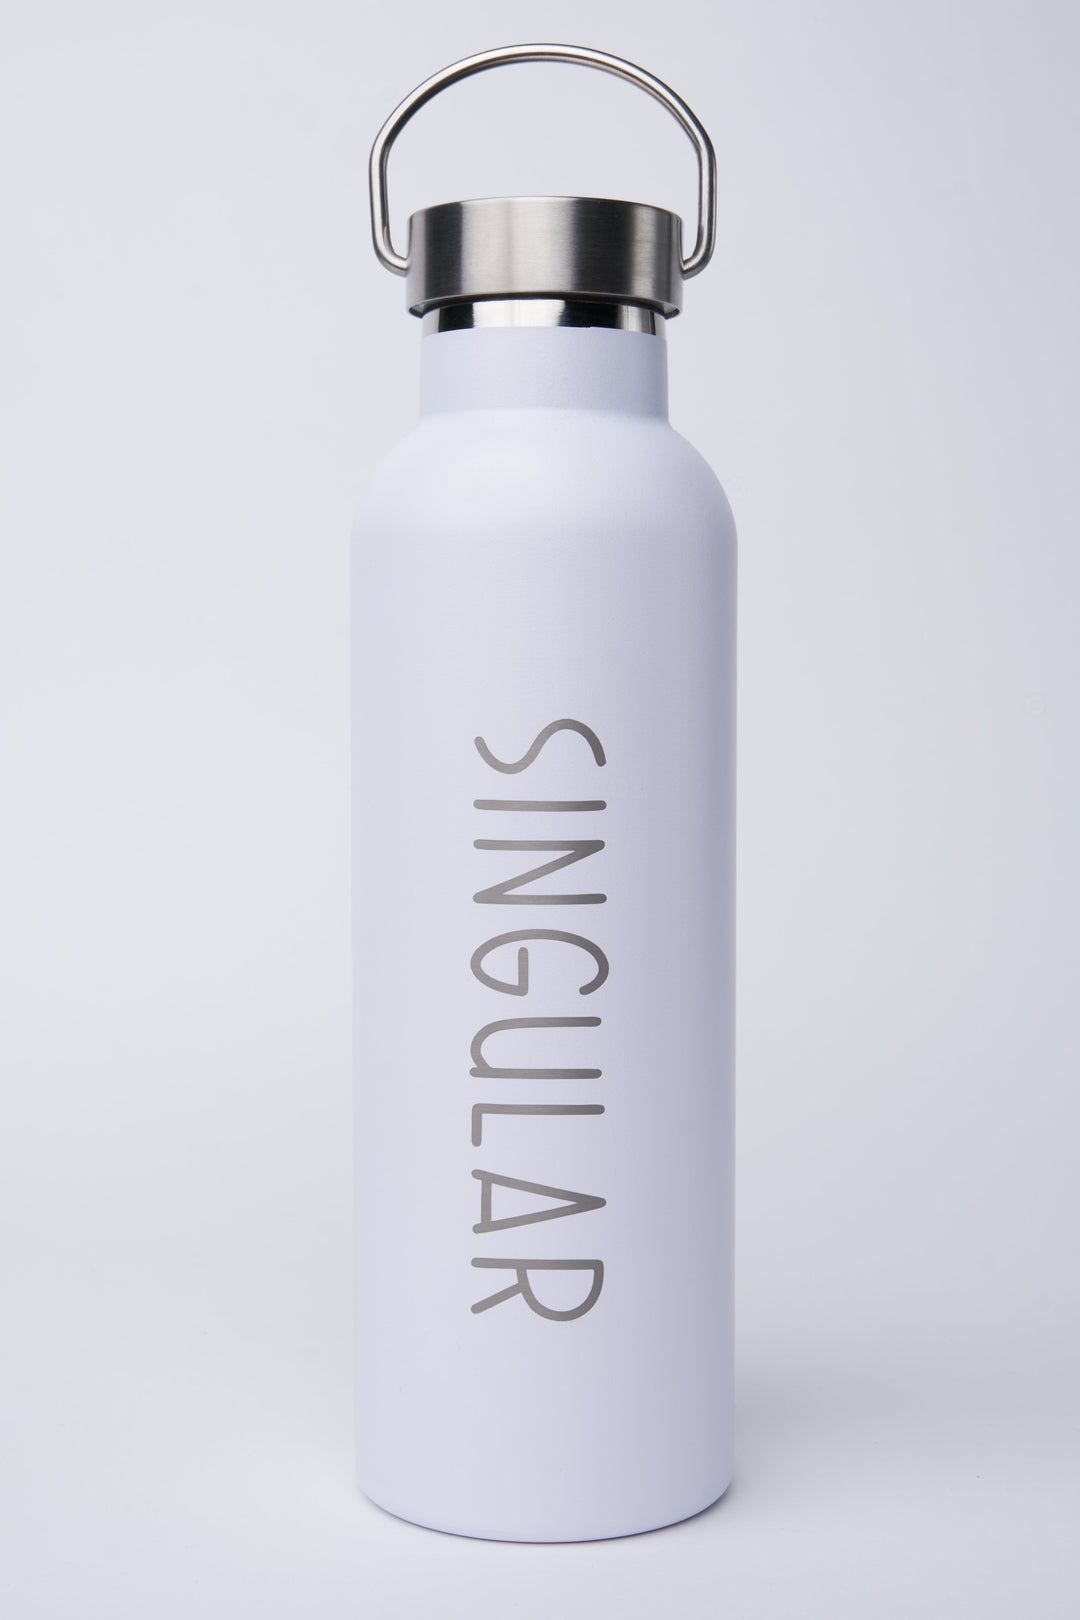 Zen Sip Drink Bottle - Fun White